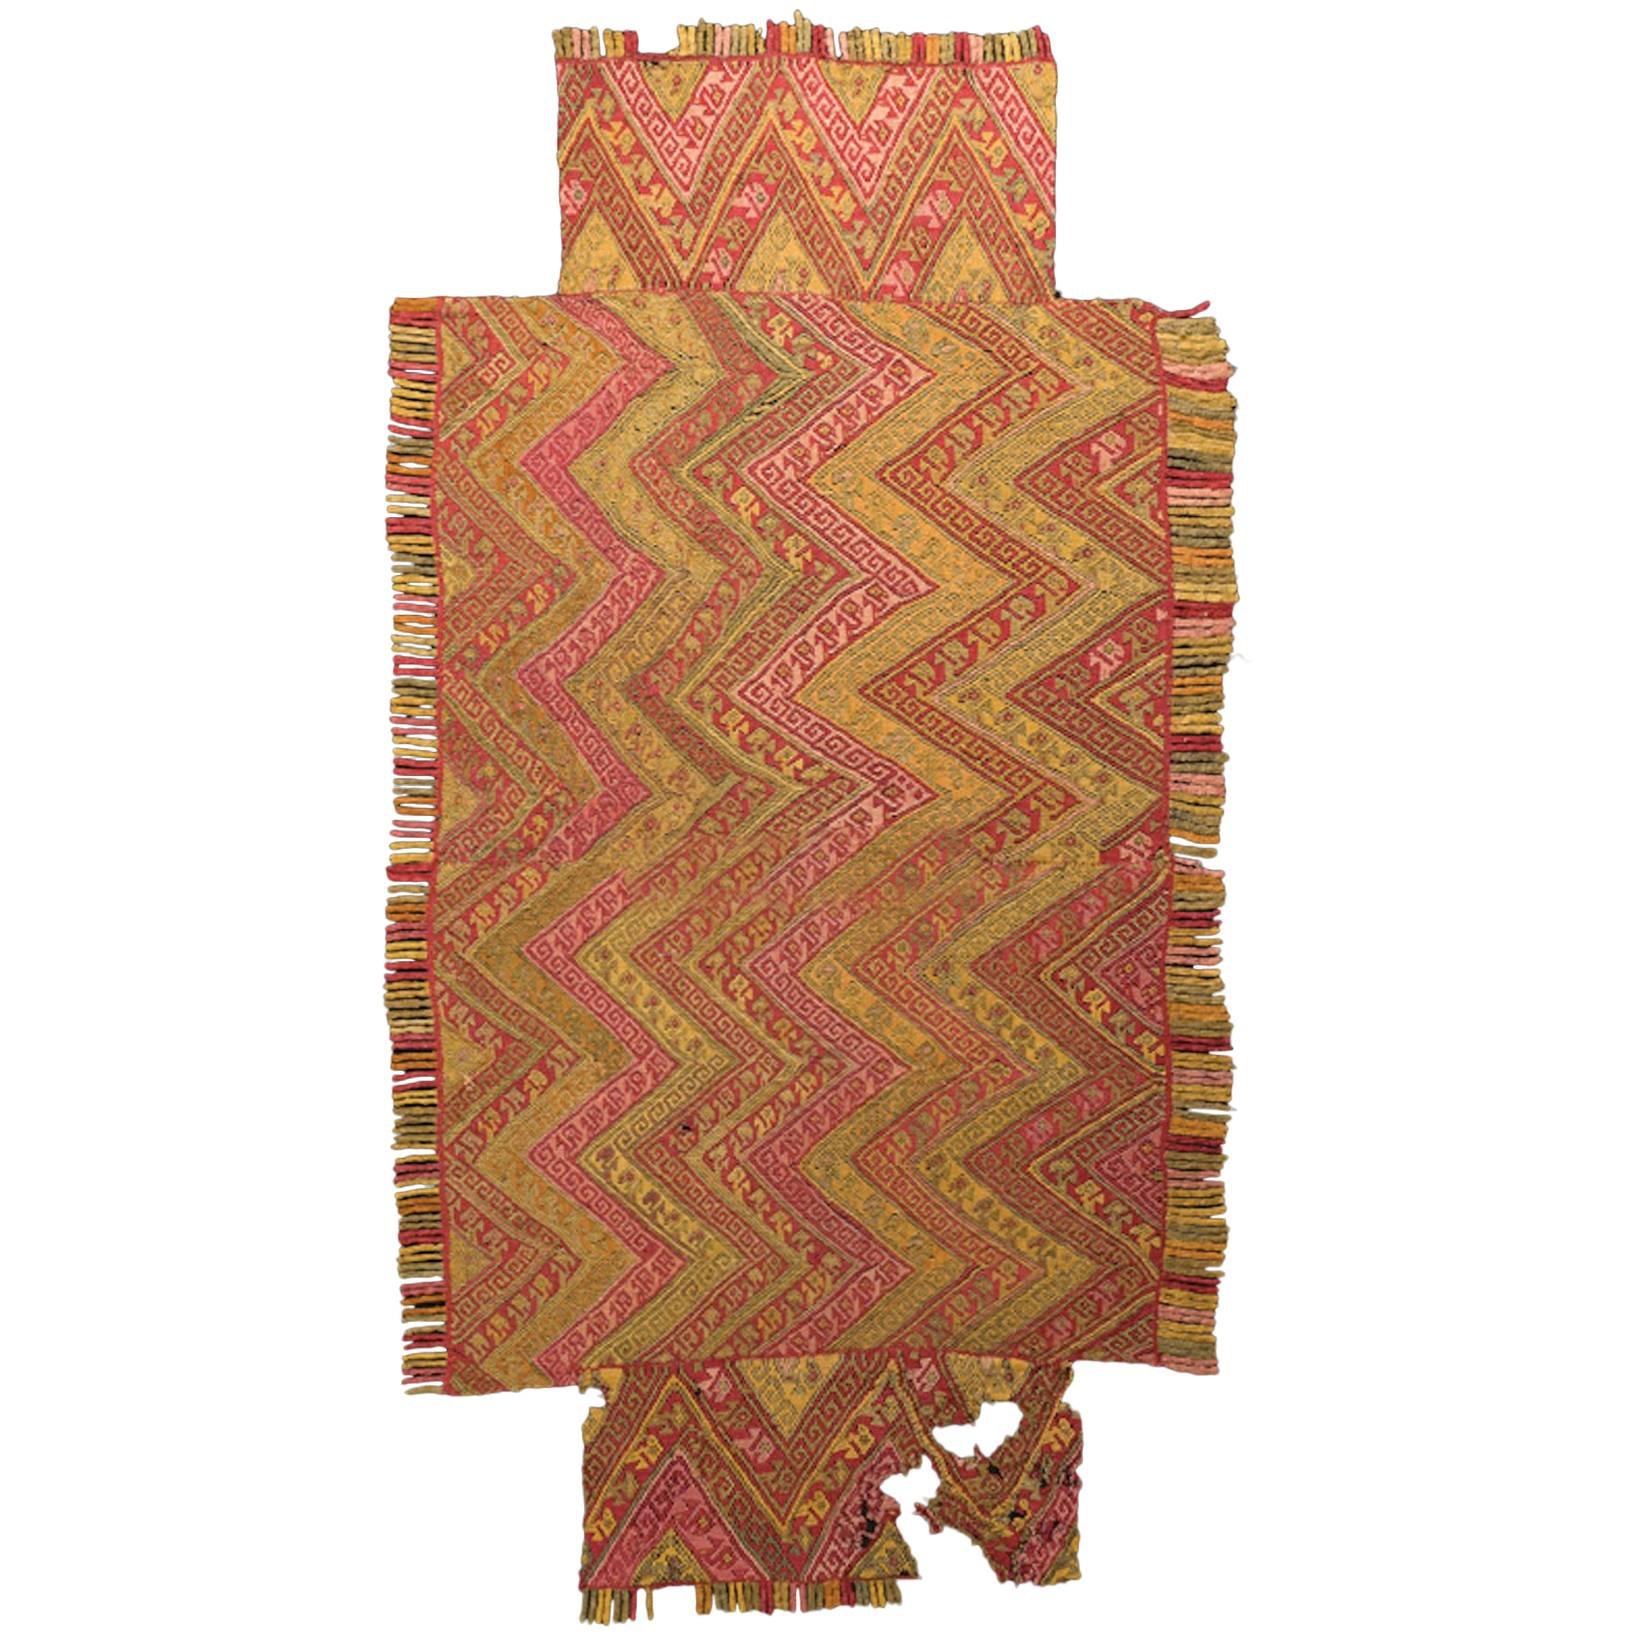 Pre-Columbian Chimu Textile, Meander Design and Fringe, Peru circa 900 to 1300AD